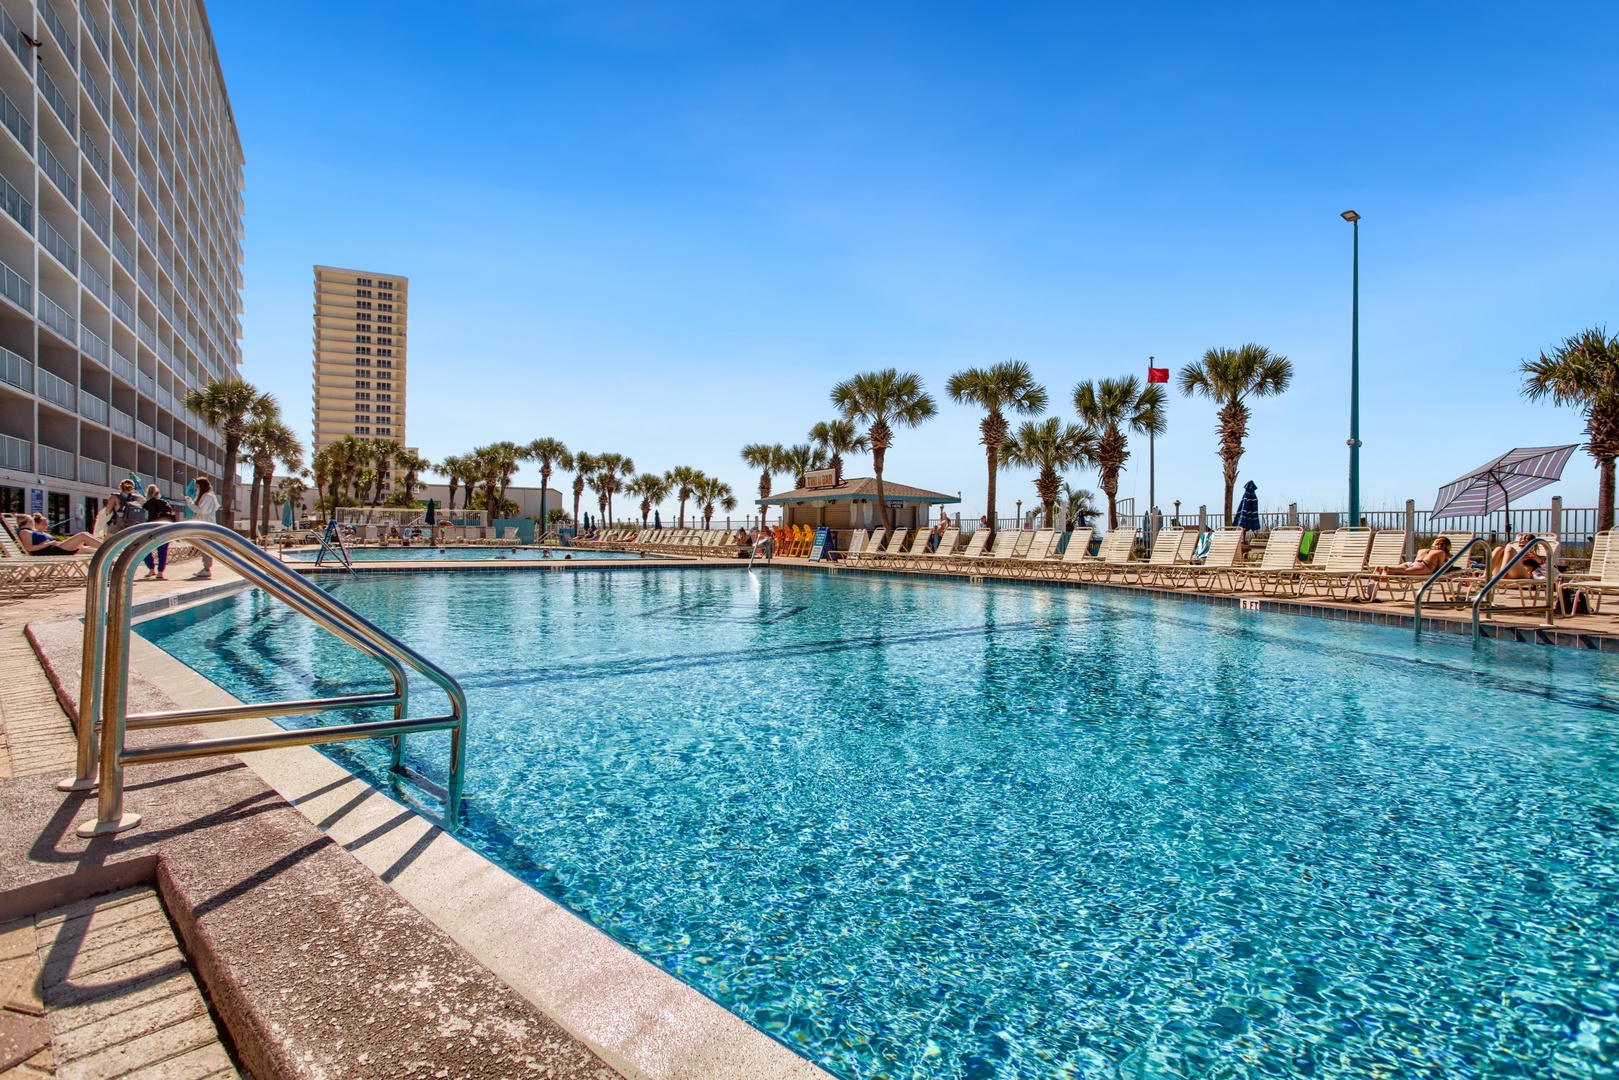 Splash around in a sparkling Resort pool, enjoying the sunshine and ocean views